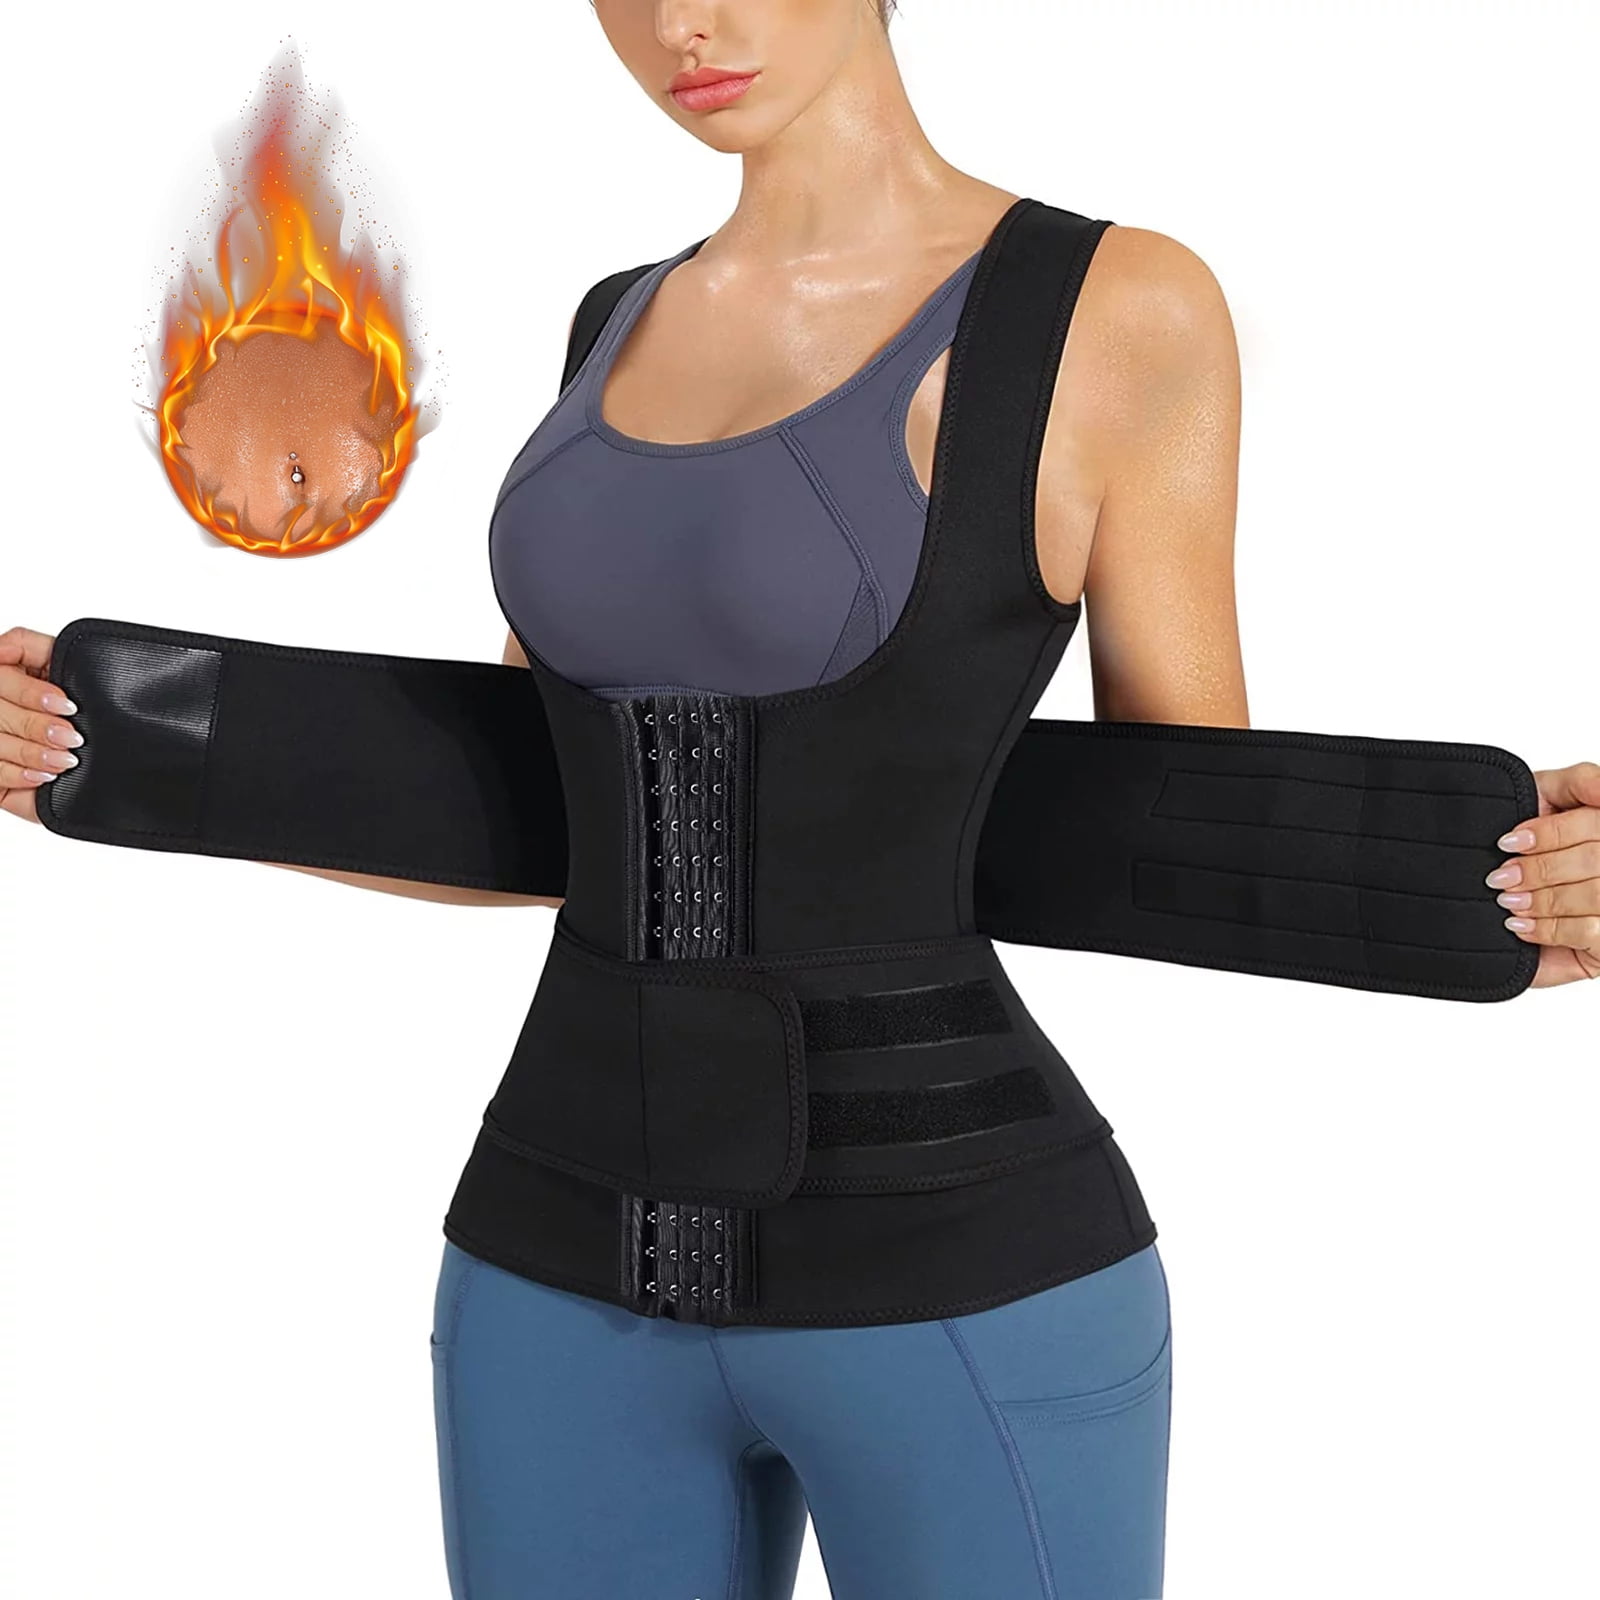  Eleady Women Waist Trainer Corset Trimmer Belt Neoprene Sauna  Sweat Suit Zipper Body Shaper with Adjustable Workout Tank Tops (Black,  Small) : Sports & Outdoors